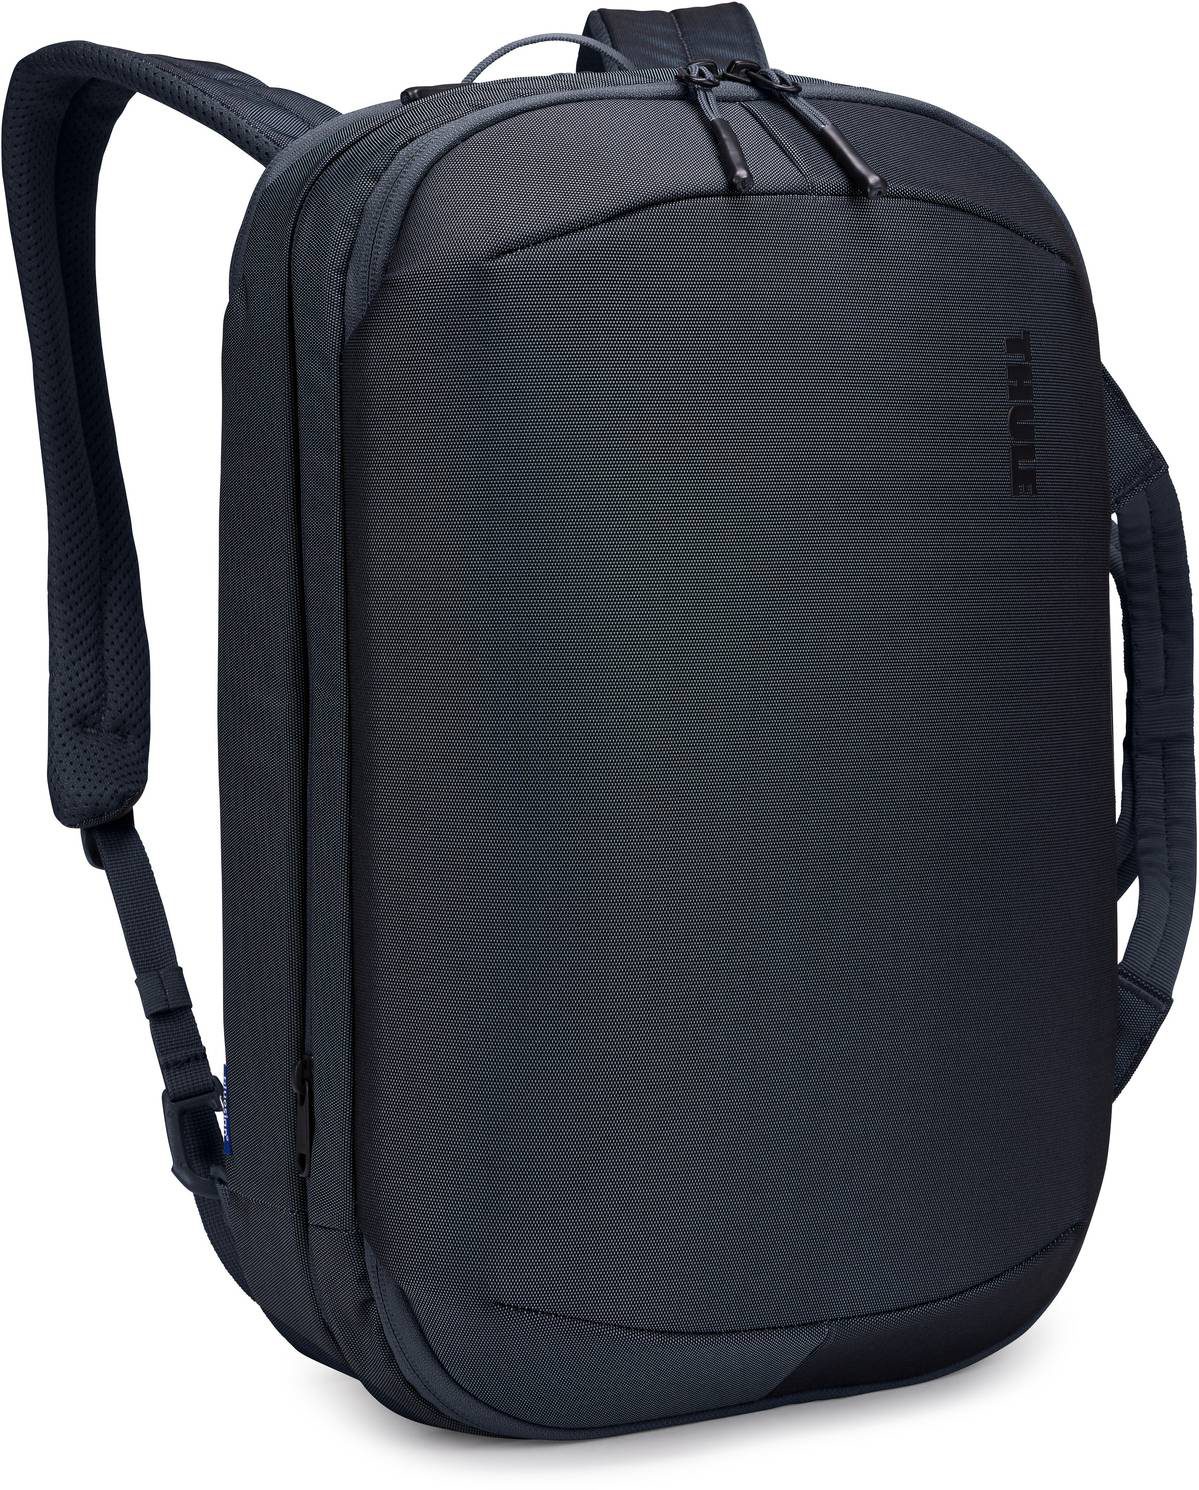 Thule Subterra 2 Hybrid Travel Bag  in Grau (15 Liter), Rucksack / Backpack